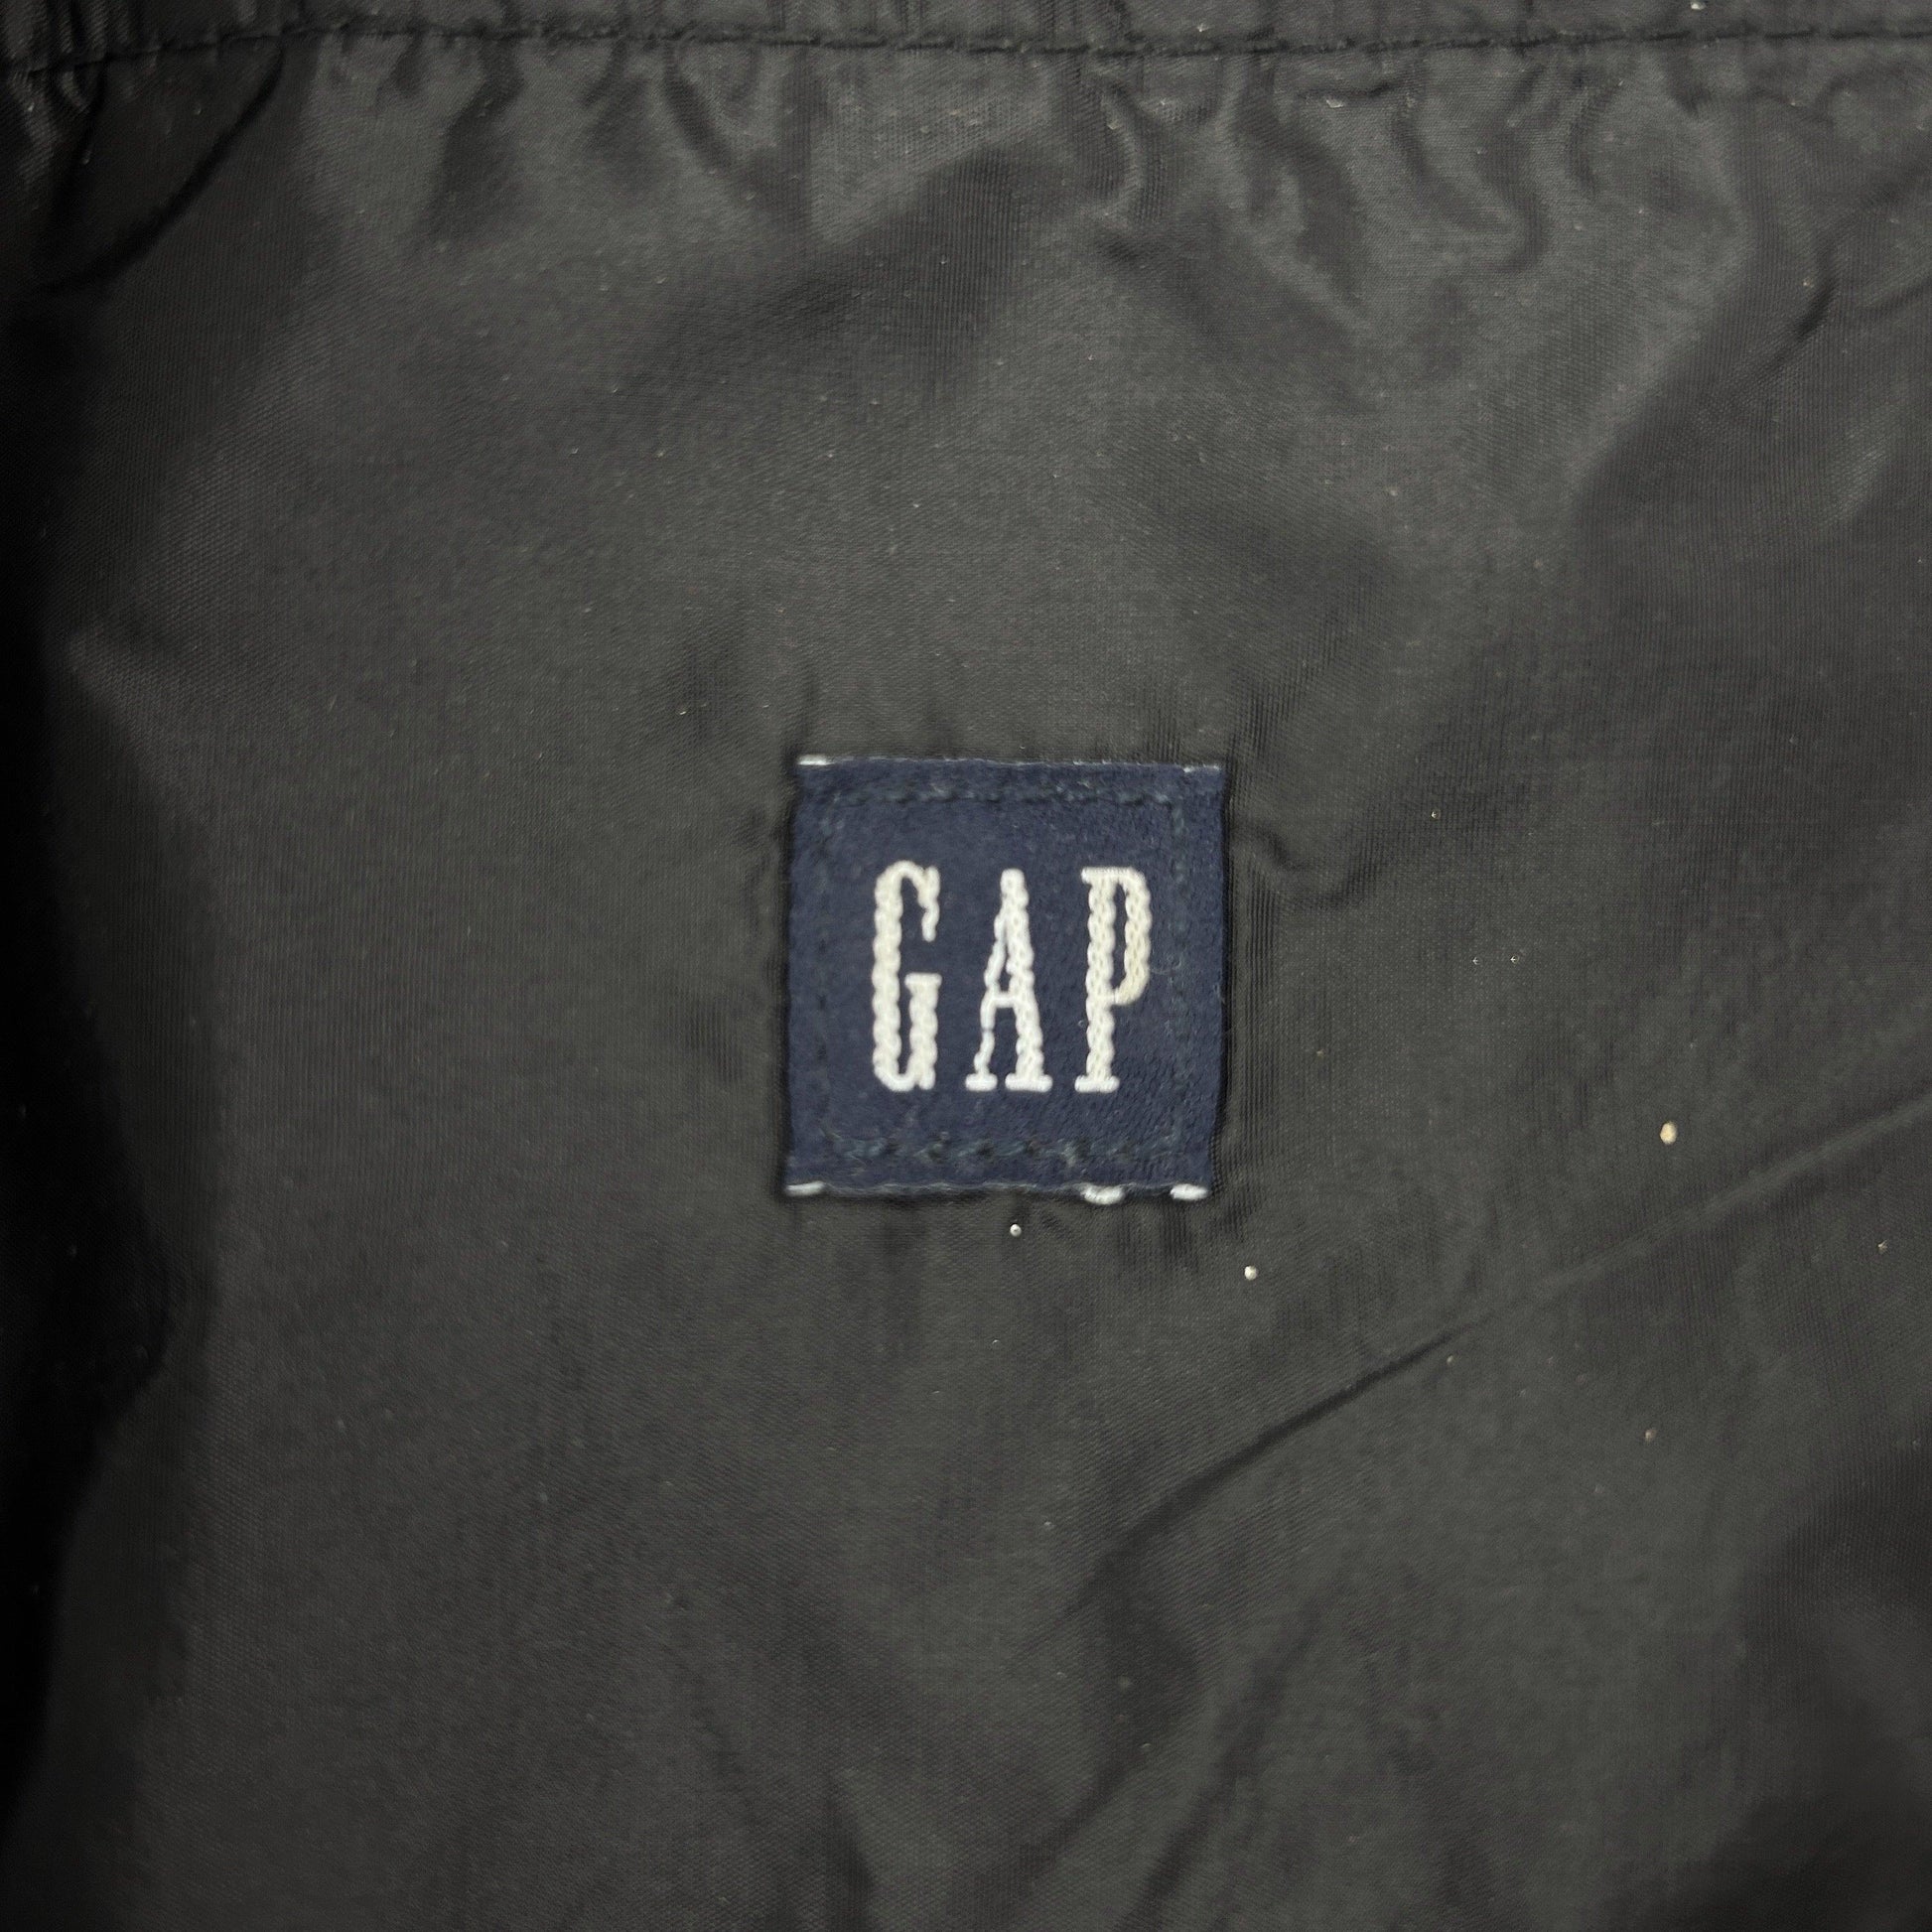 Vintage GAP Mutli Pocket Cross Body Bag - Known Source